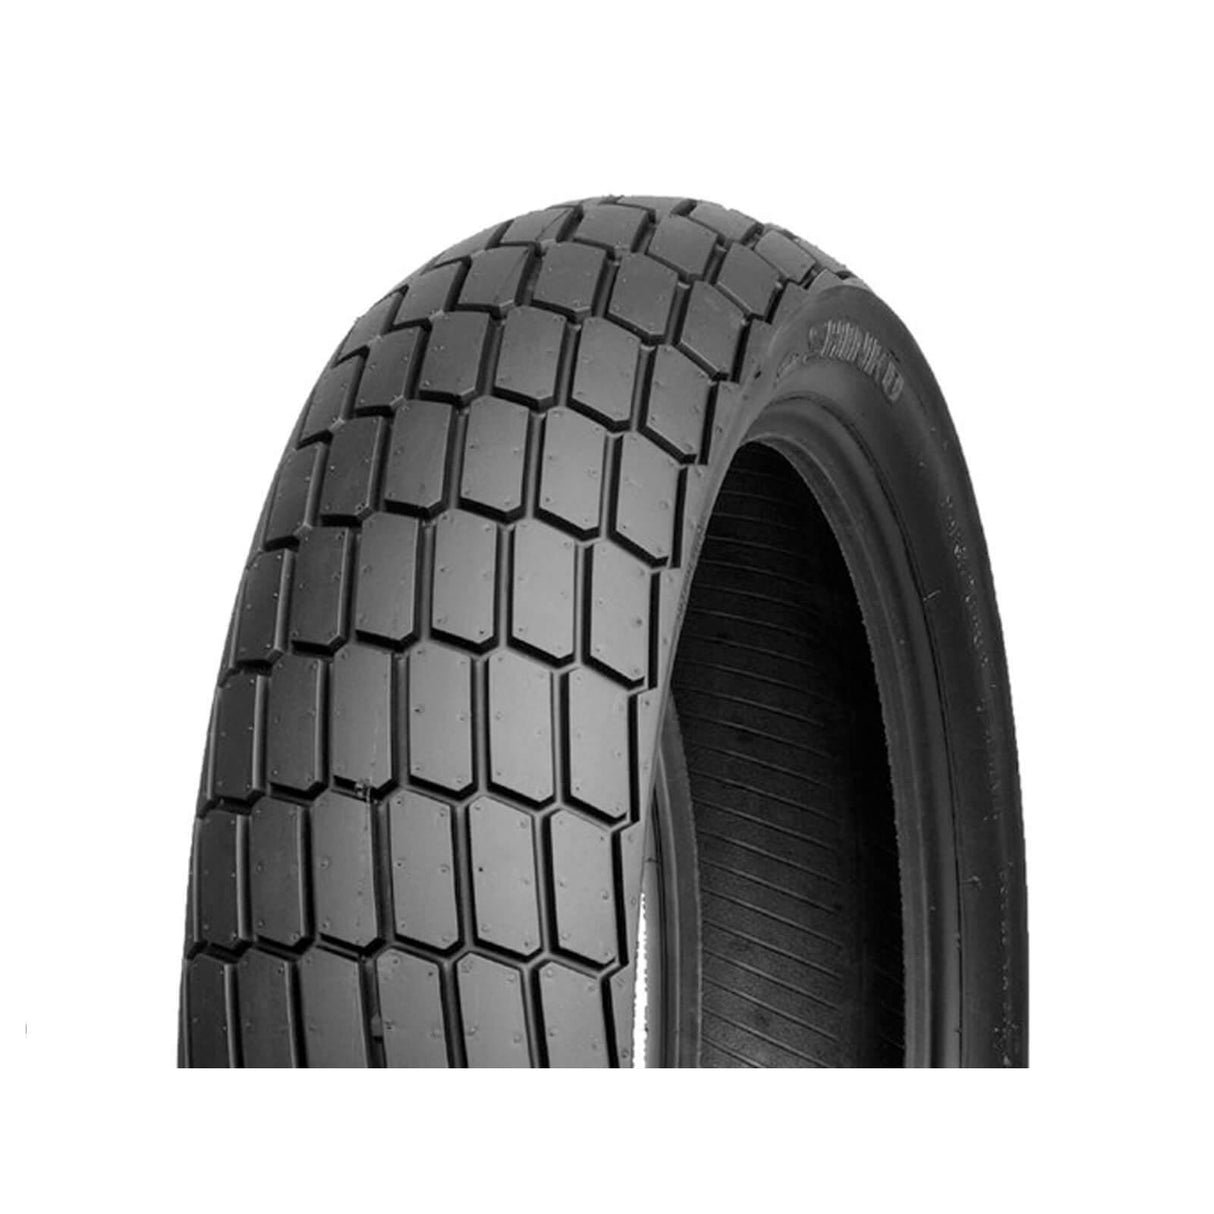 140/80-19 SR268 Flat Track Soft Shinko Rear Tyre